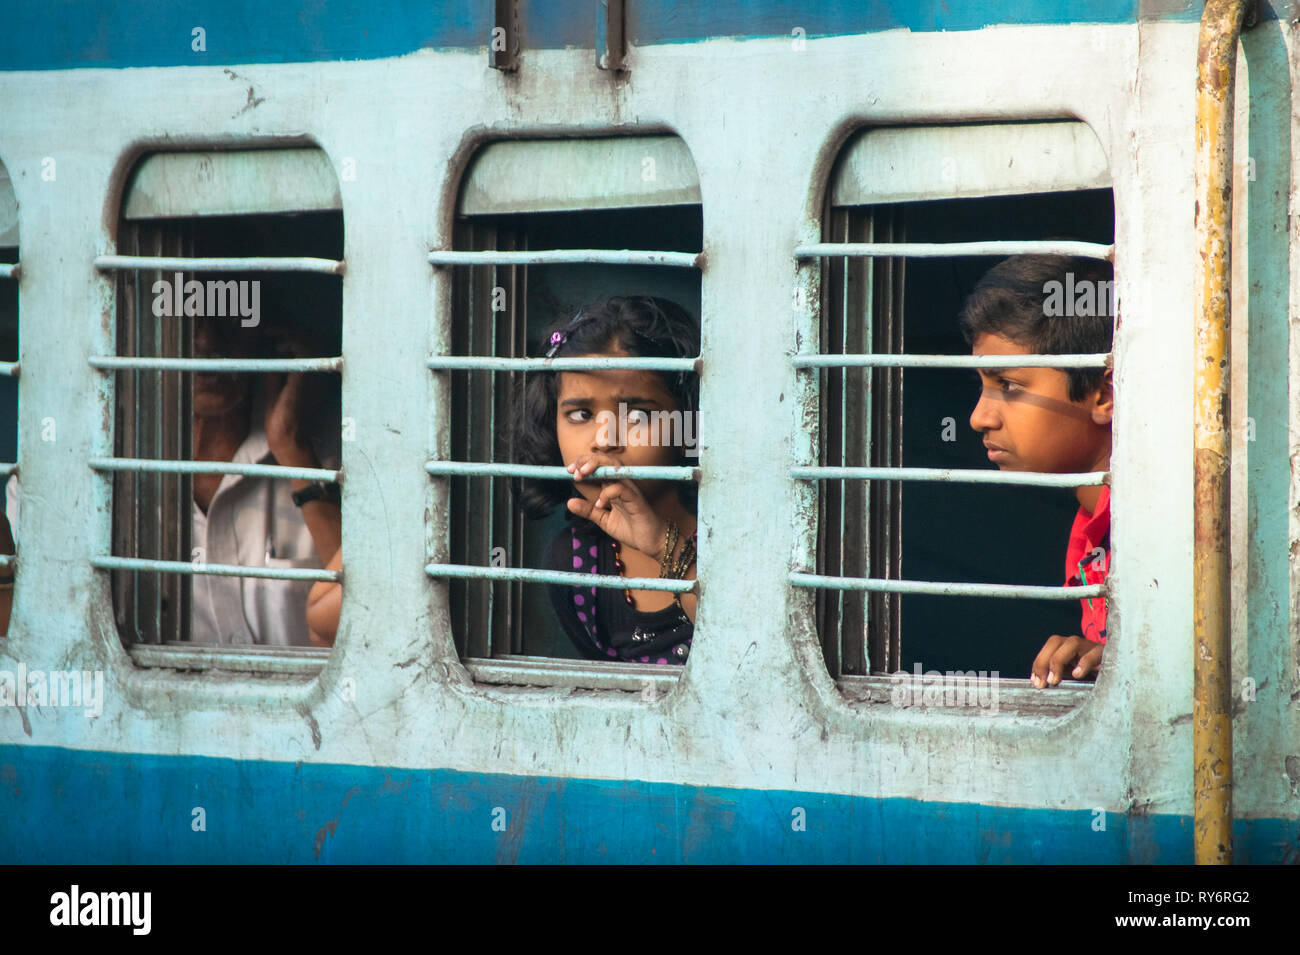 Worried Girl and Children Behind Window Bars on India Railway Train, Delhi  Stock Photo - Alamy